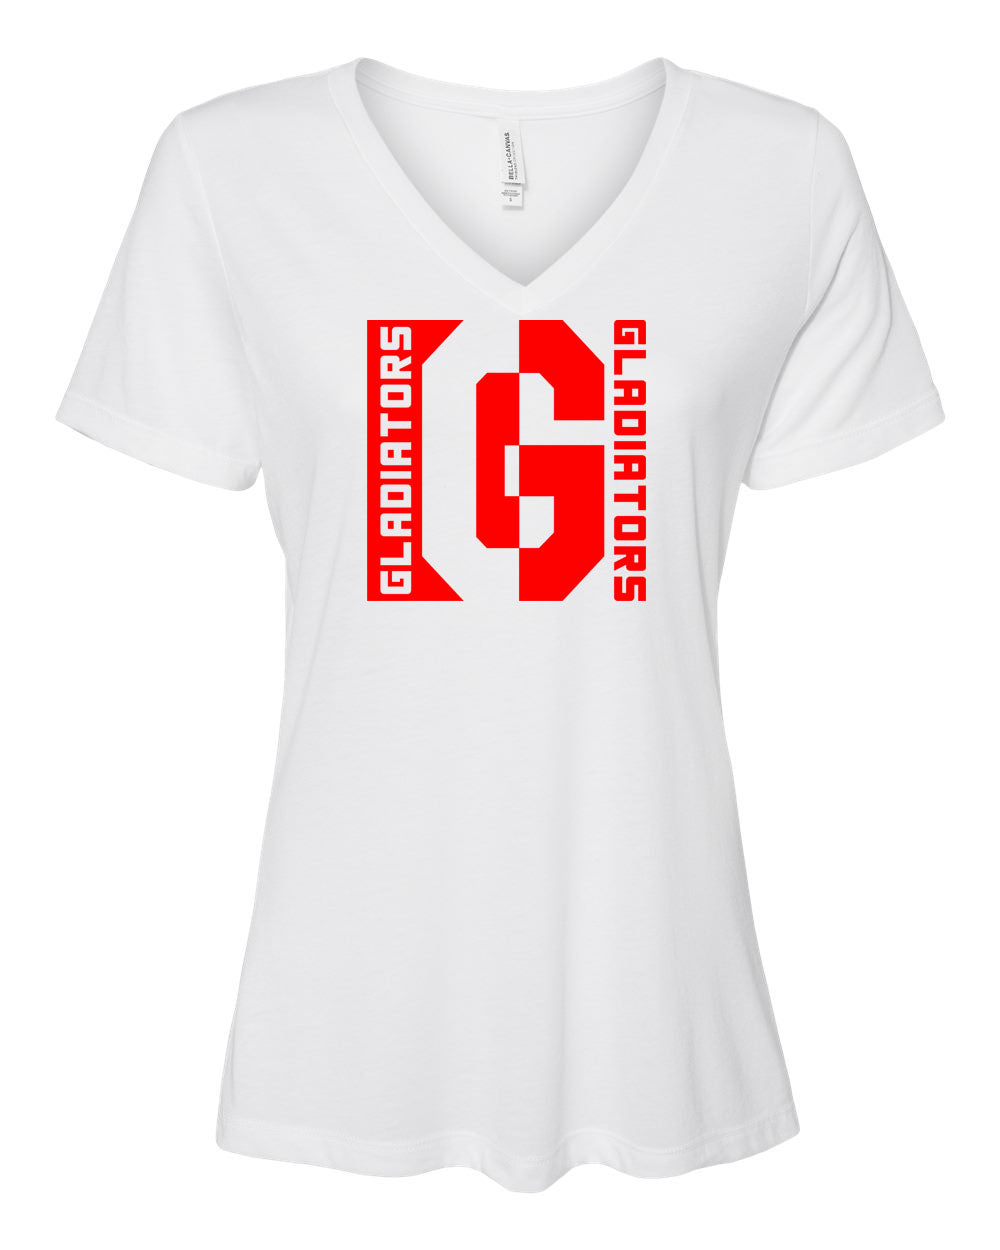 Goshen school Design 5 V-neck T-Shirt